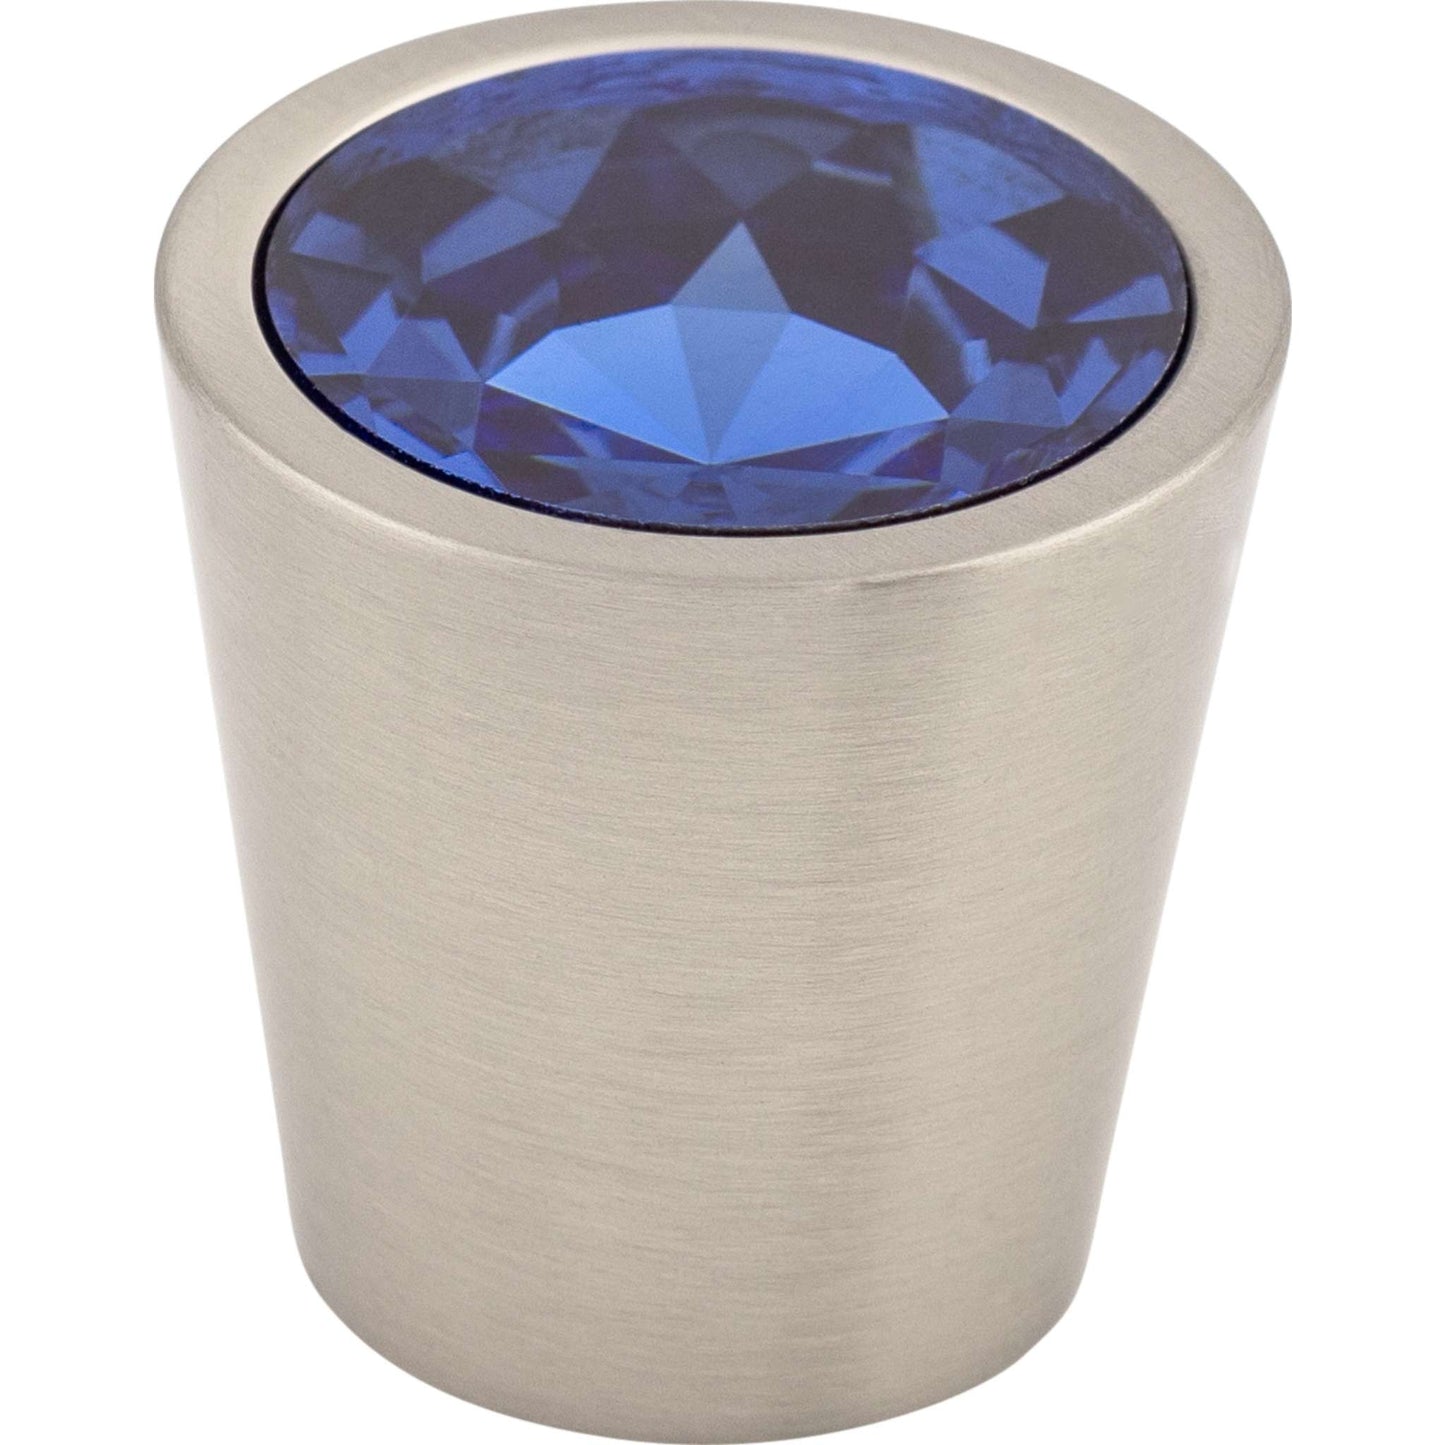 Top Knobs - Blue Crystal Center Knob